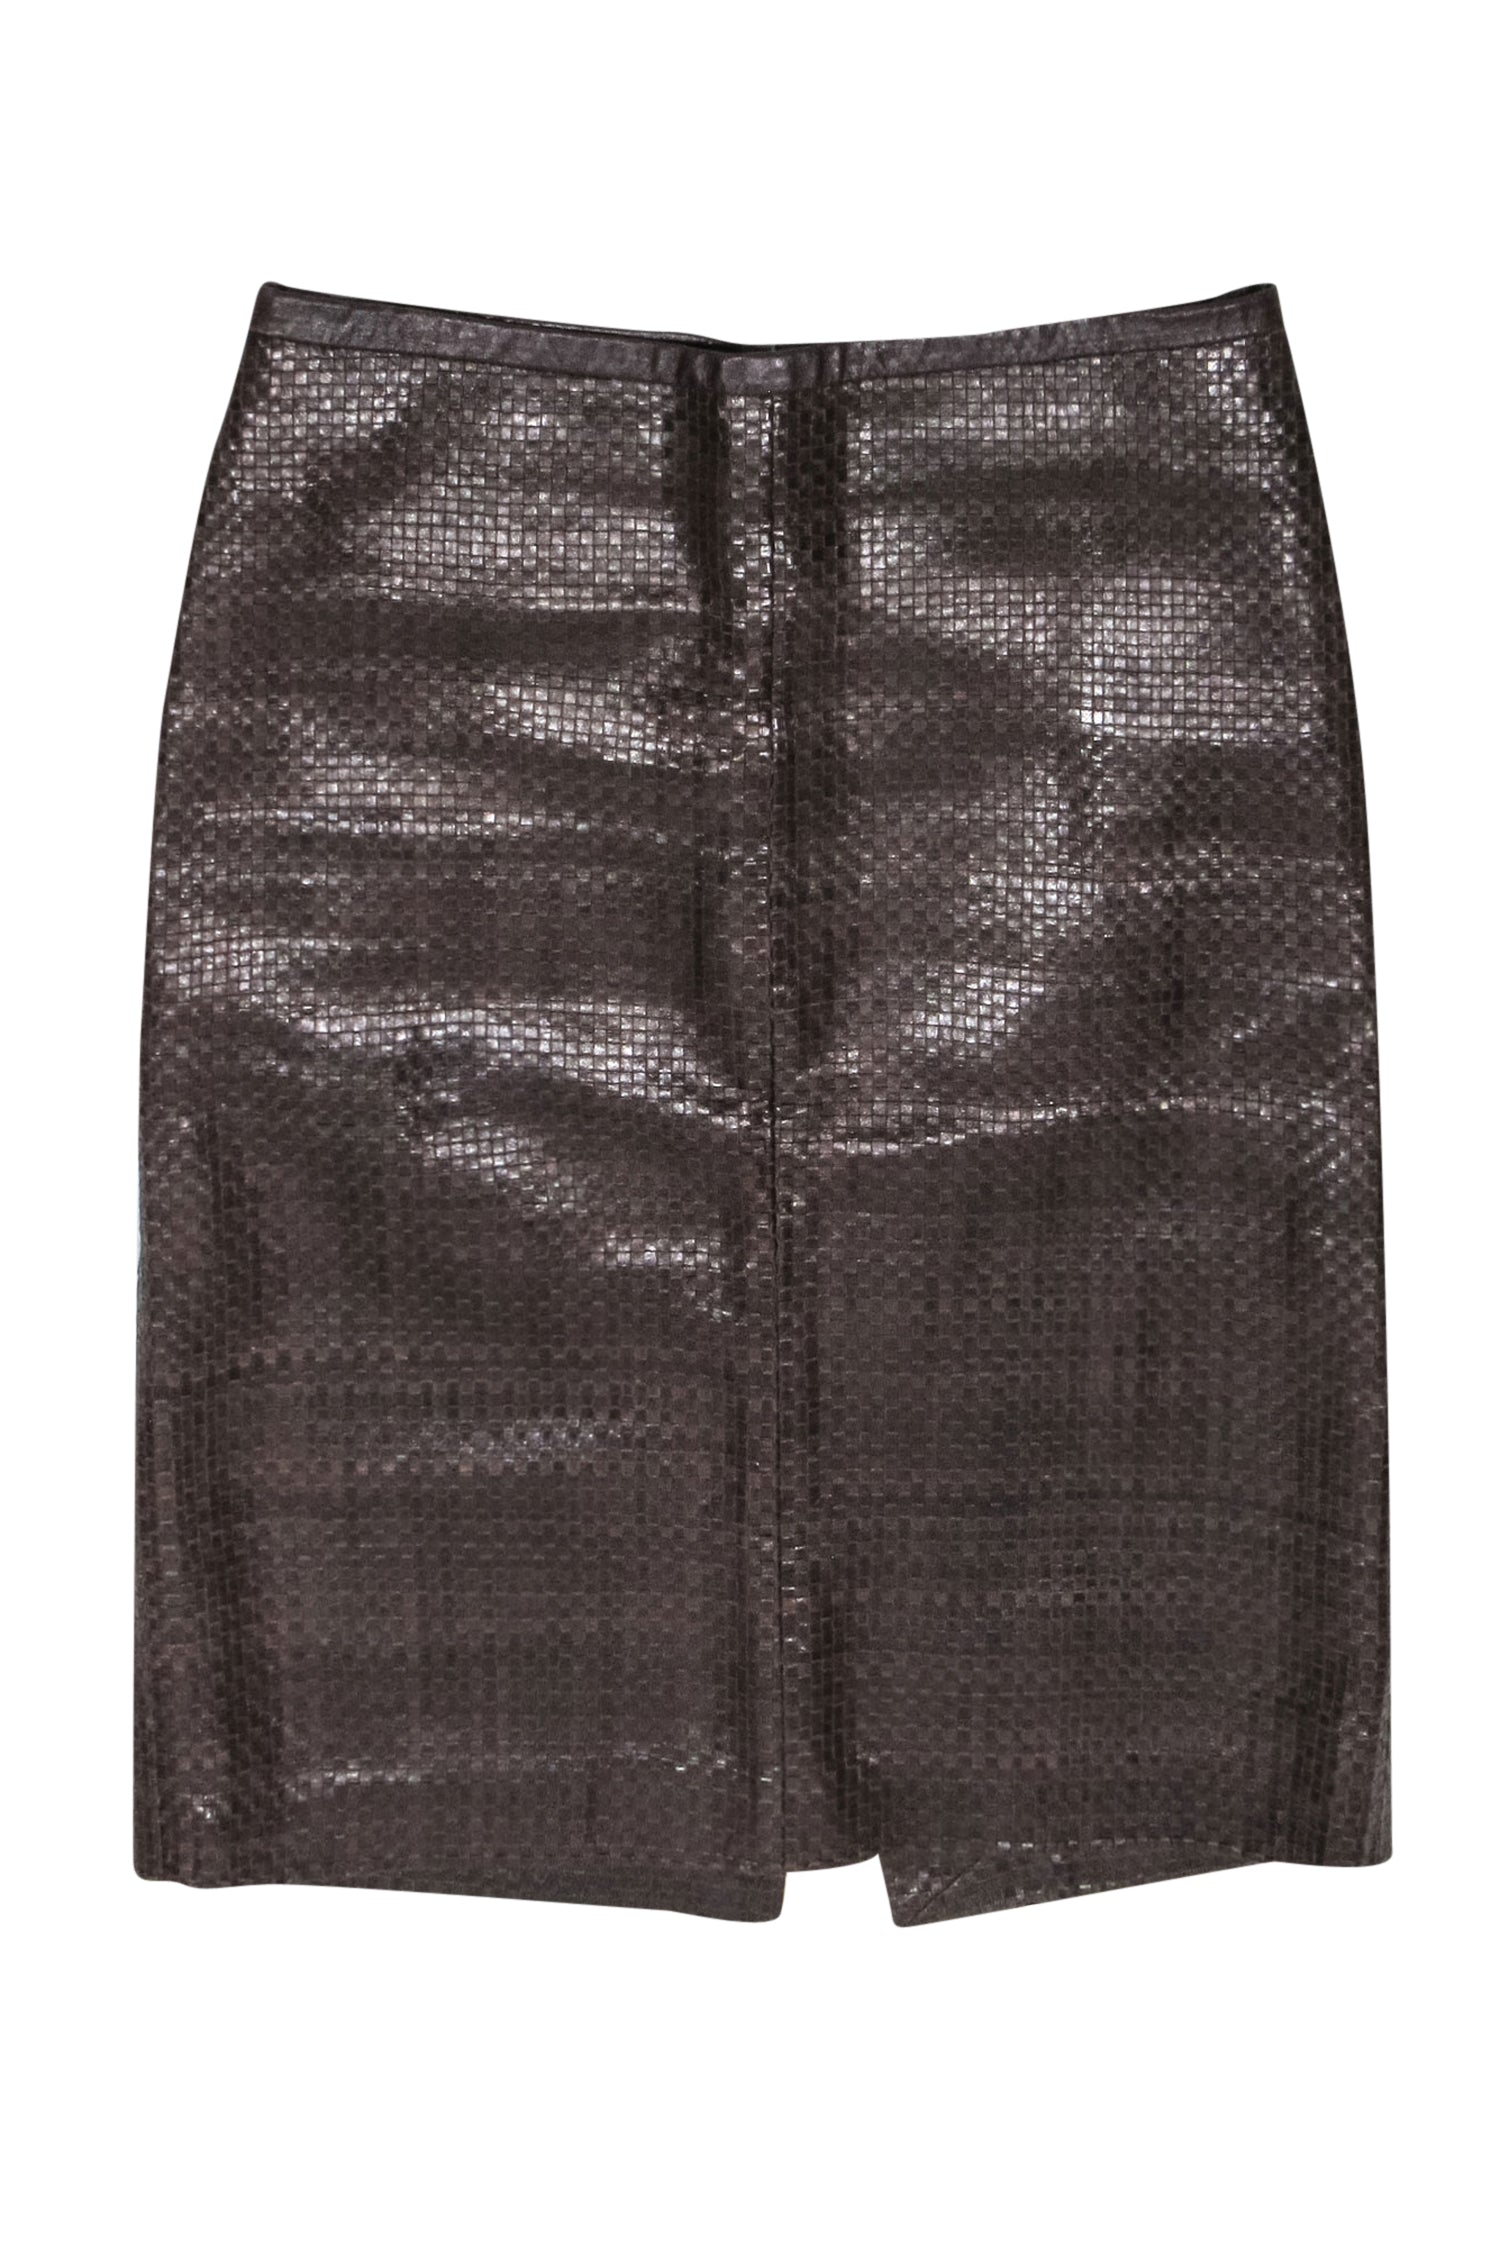 Max Mara - Dark Brown Woven Leather Pencil Skirt Sz 4